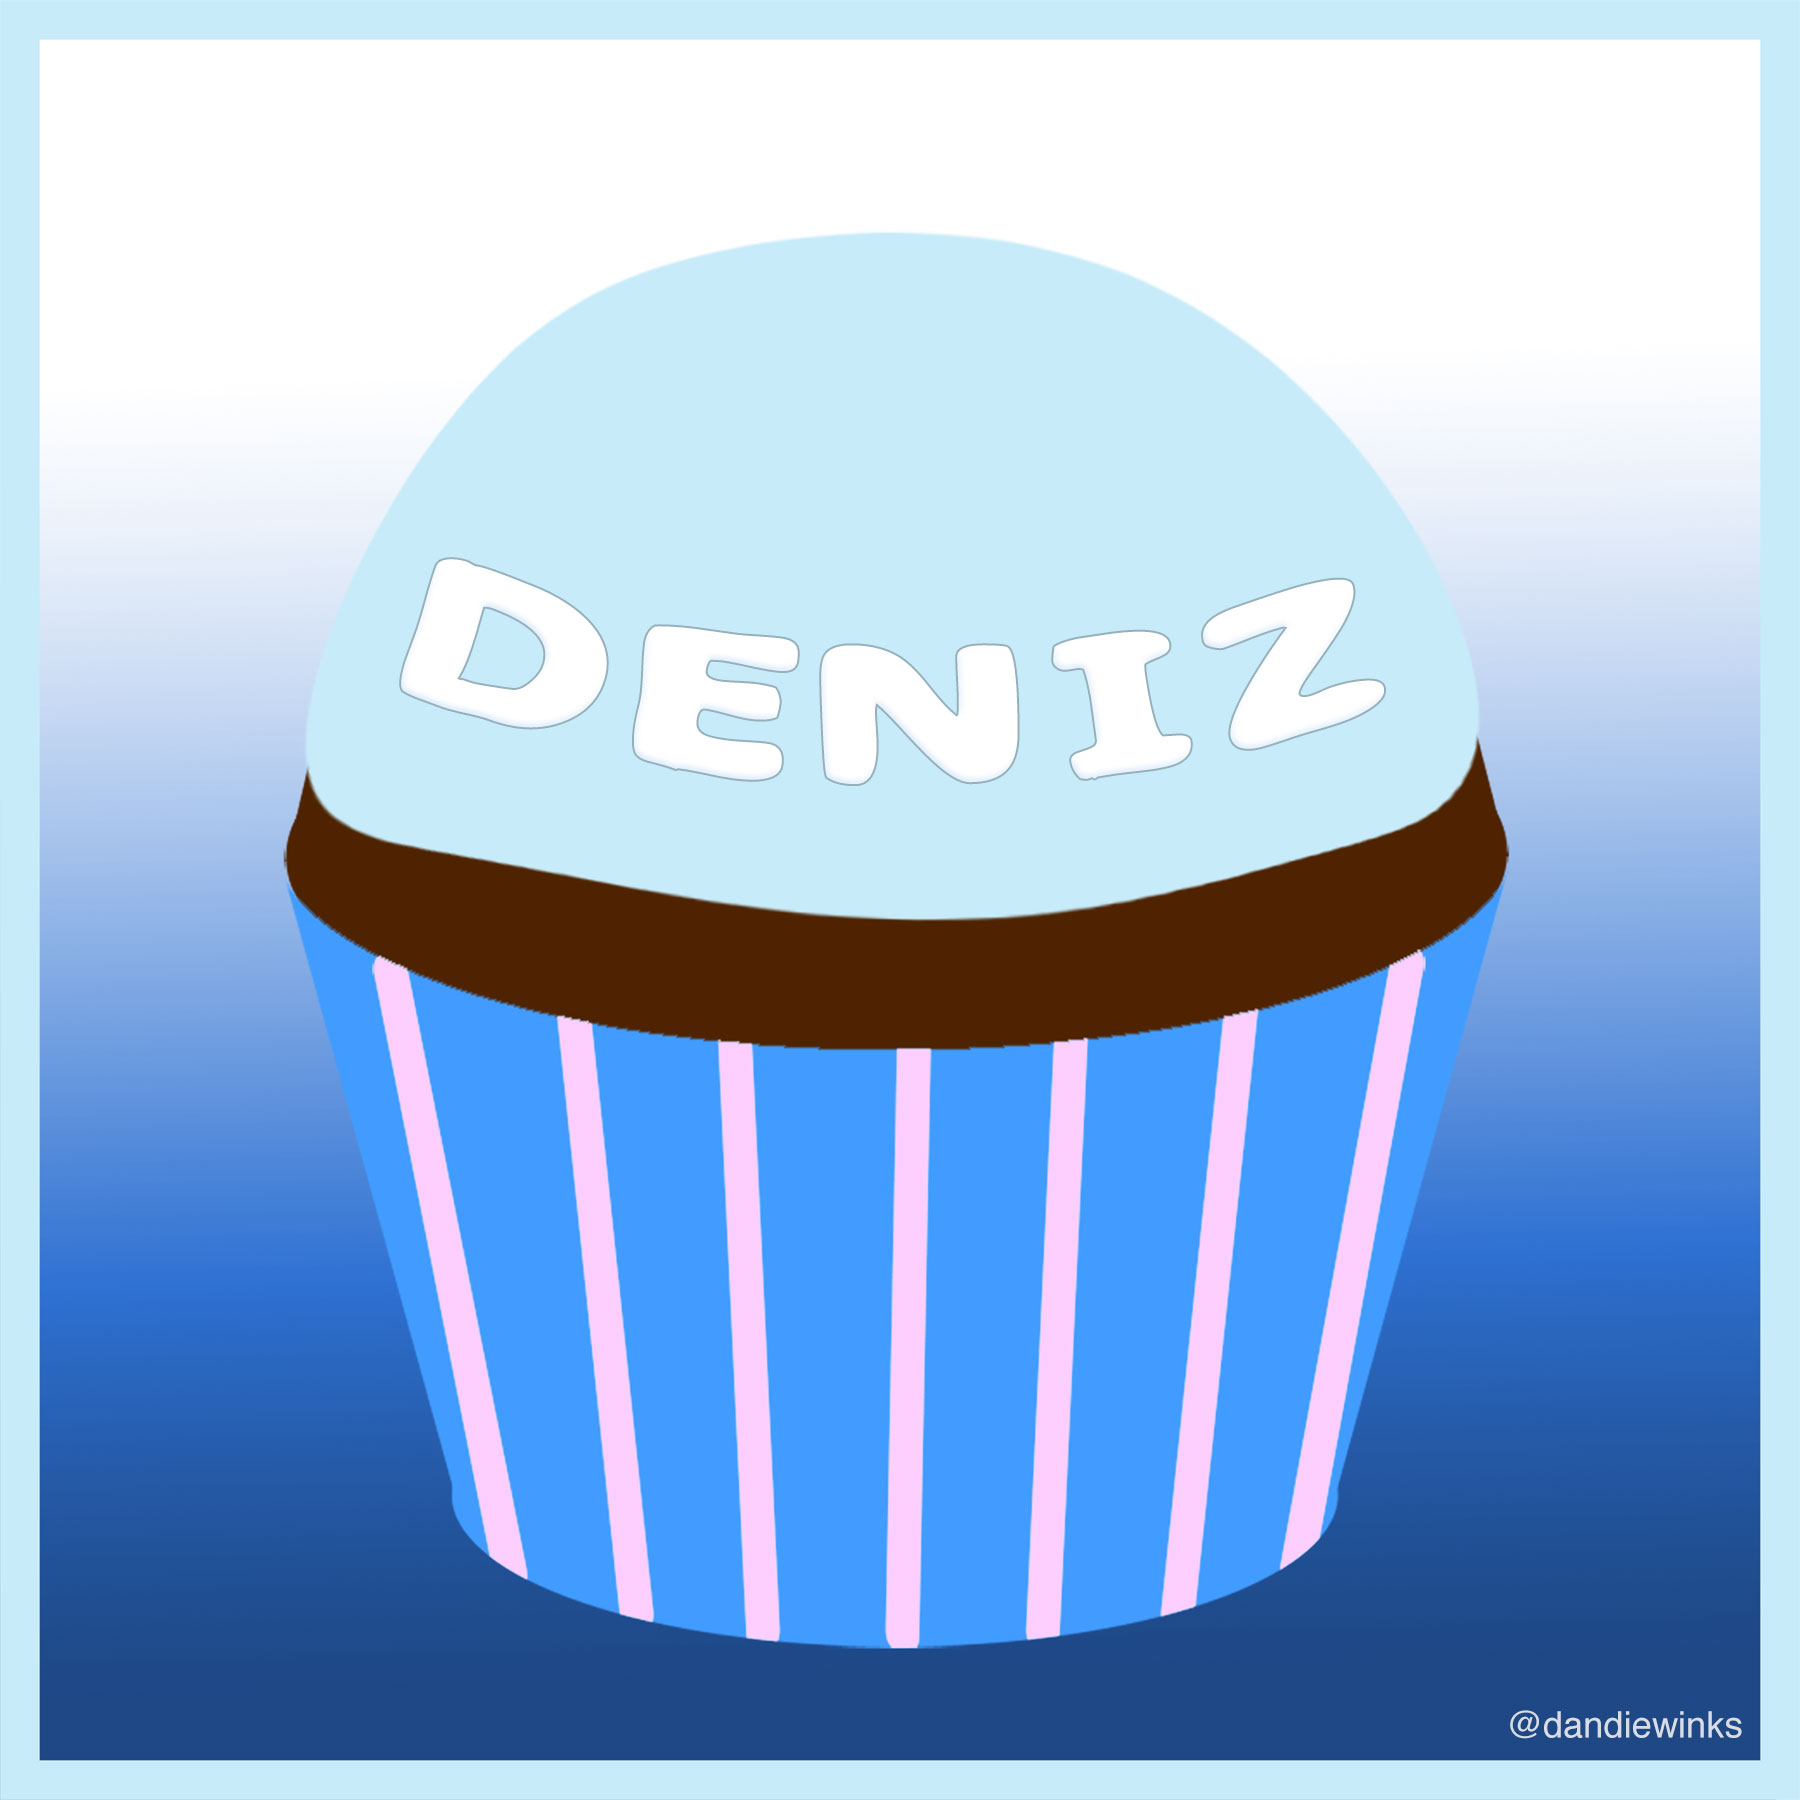 Deniz's remembrance cupcake from Rahşan